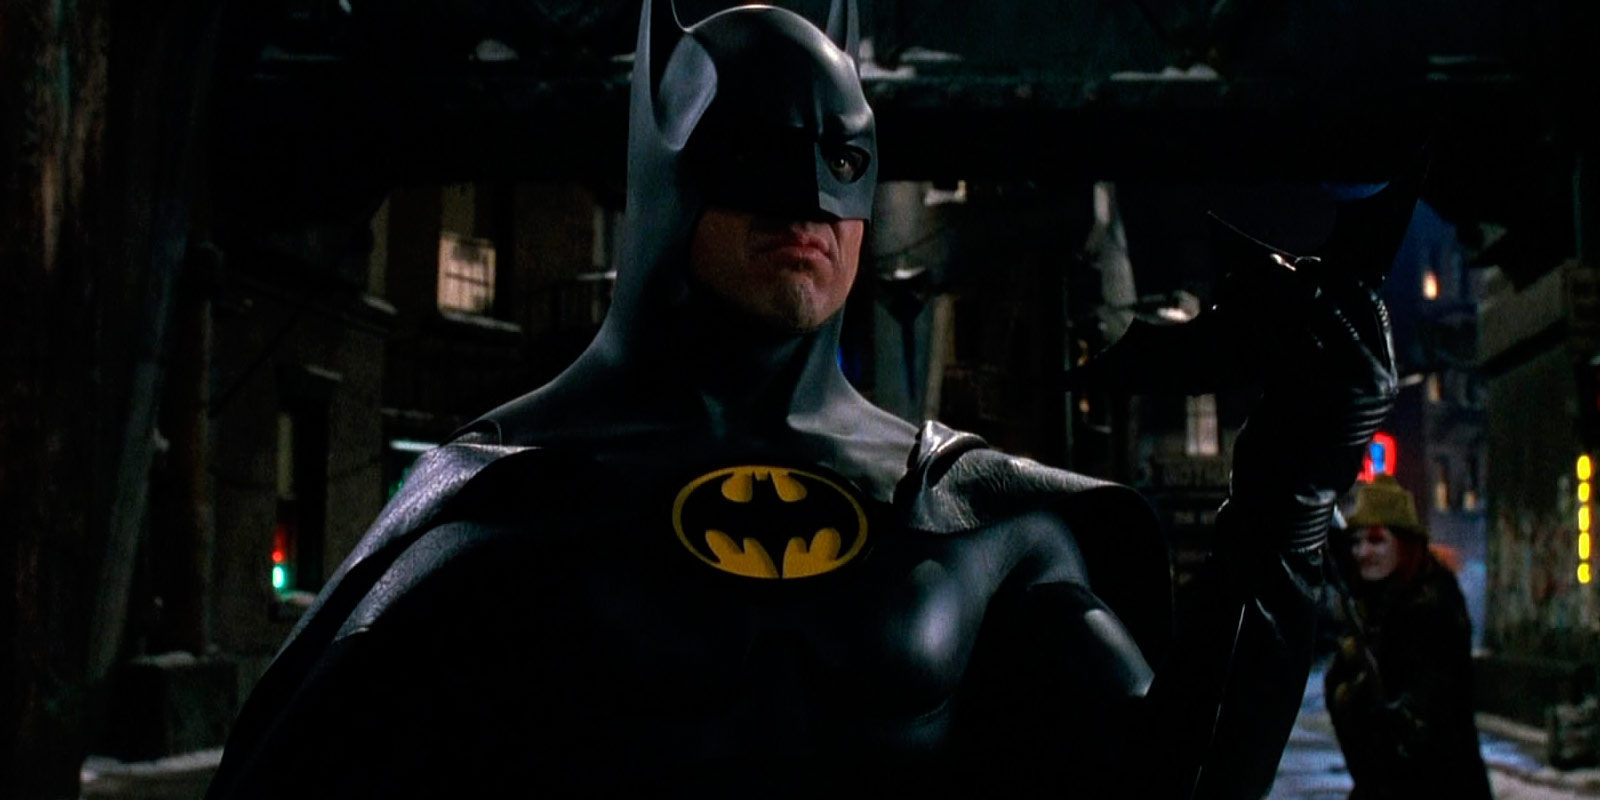 Subastan el traje que utilizó Michael Keaton en 'Batman Returns' - Zonared